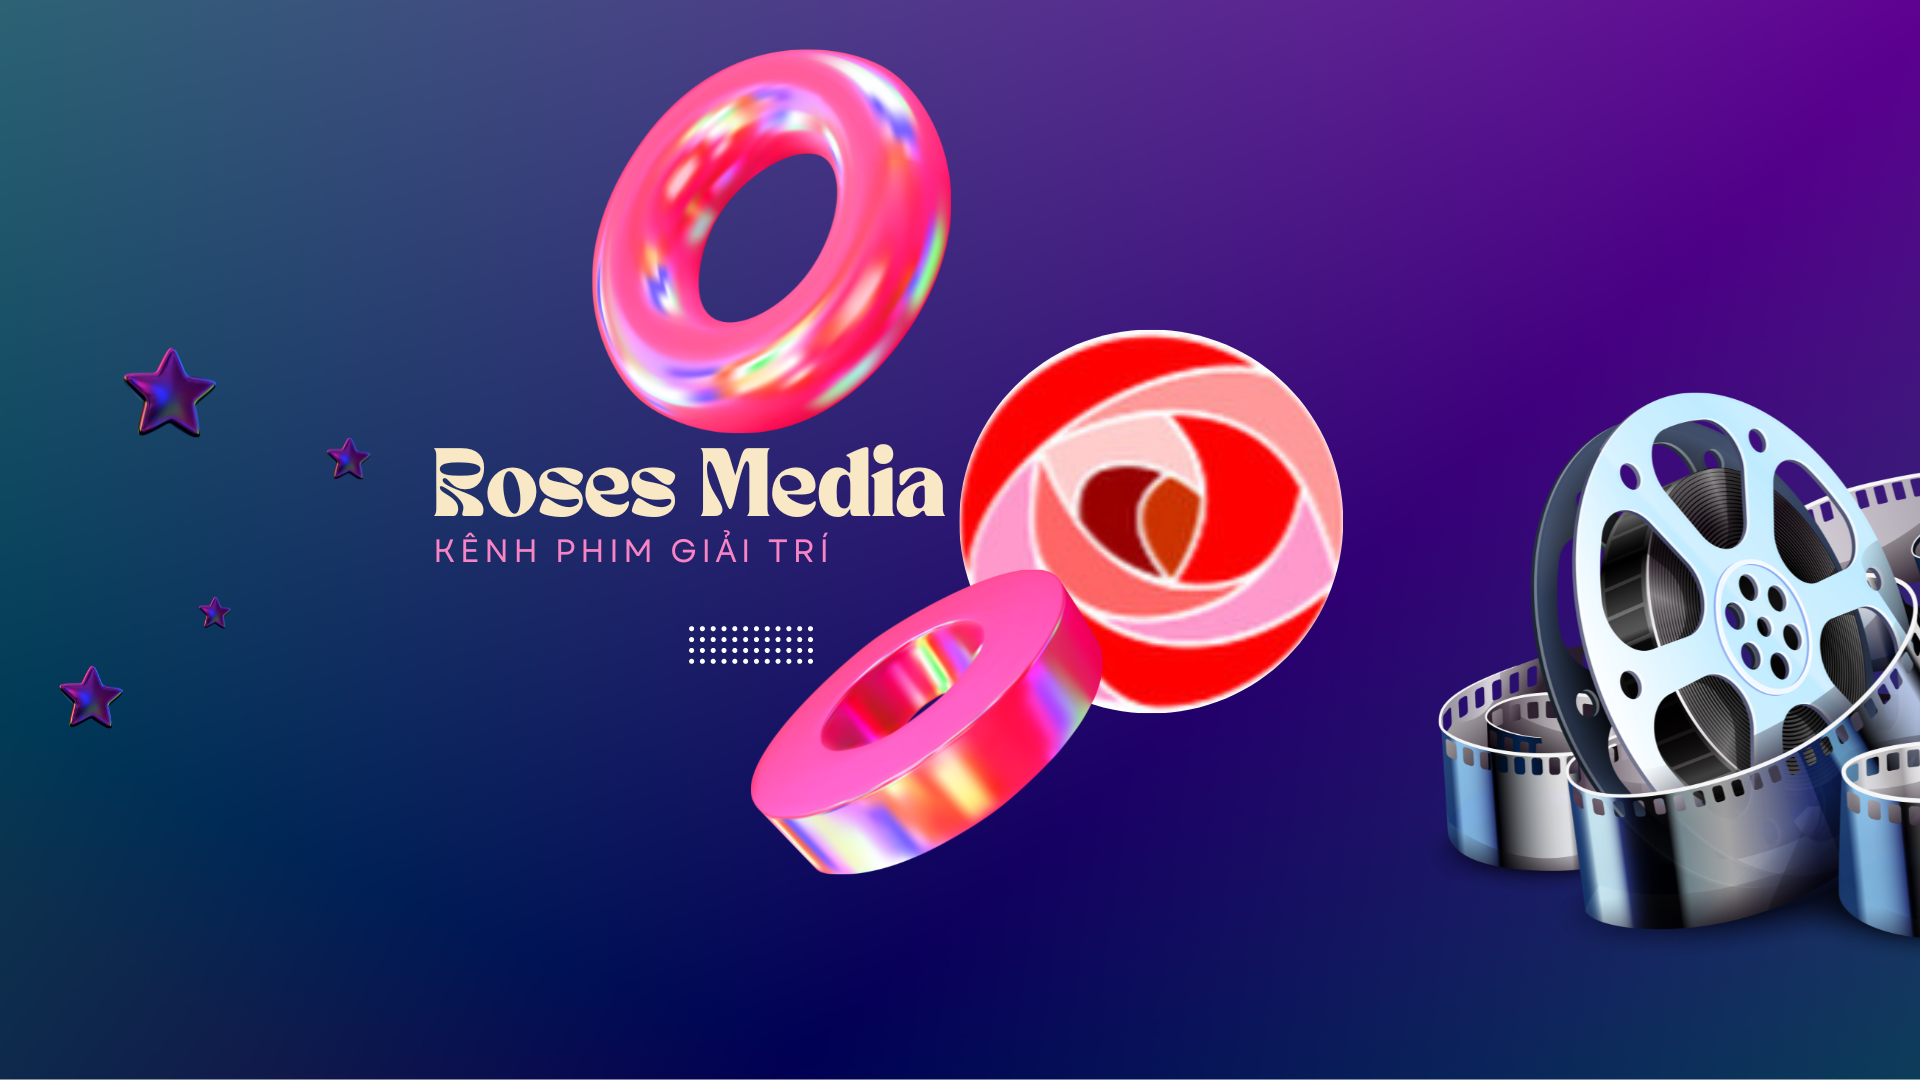 Roses Media